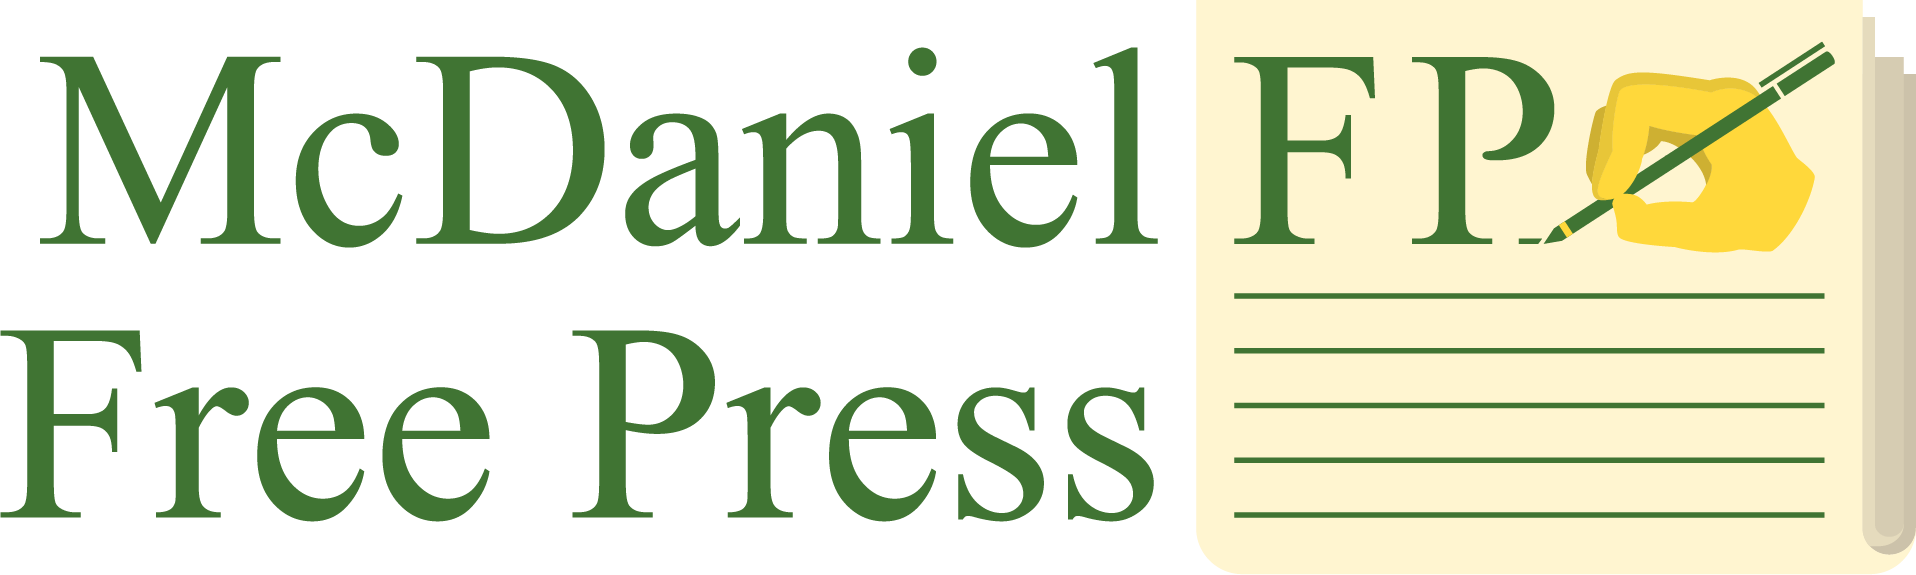 The McDaniel Free Press